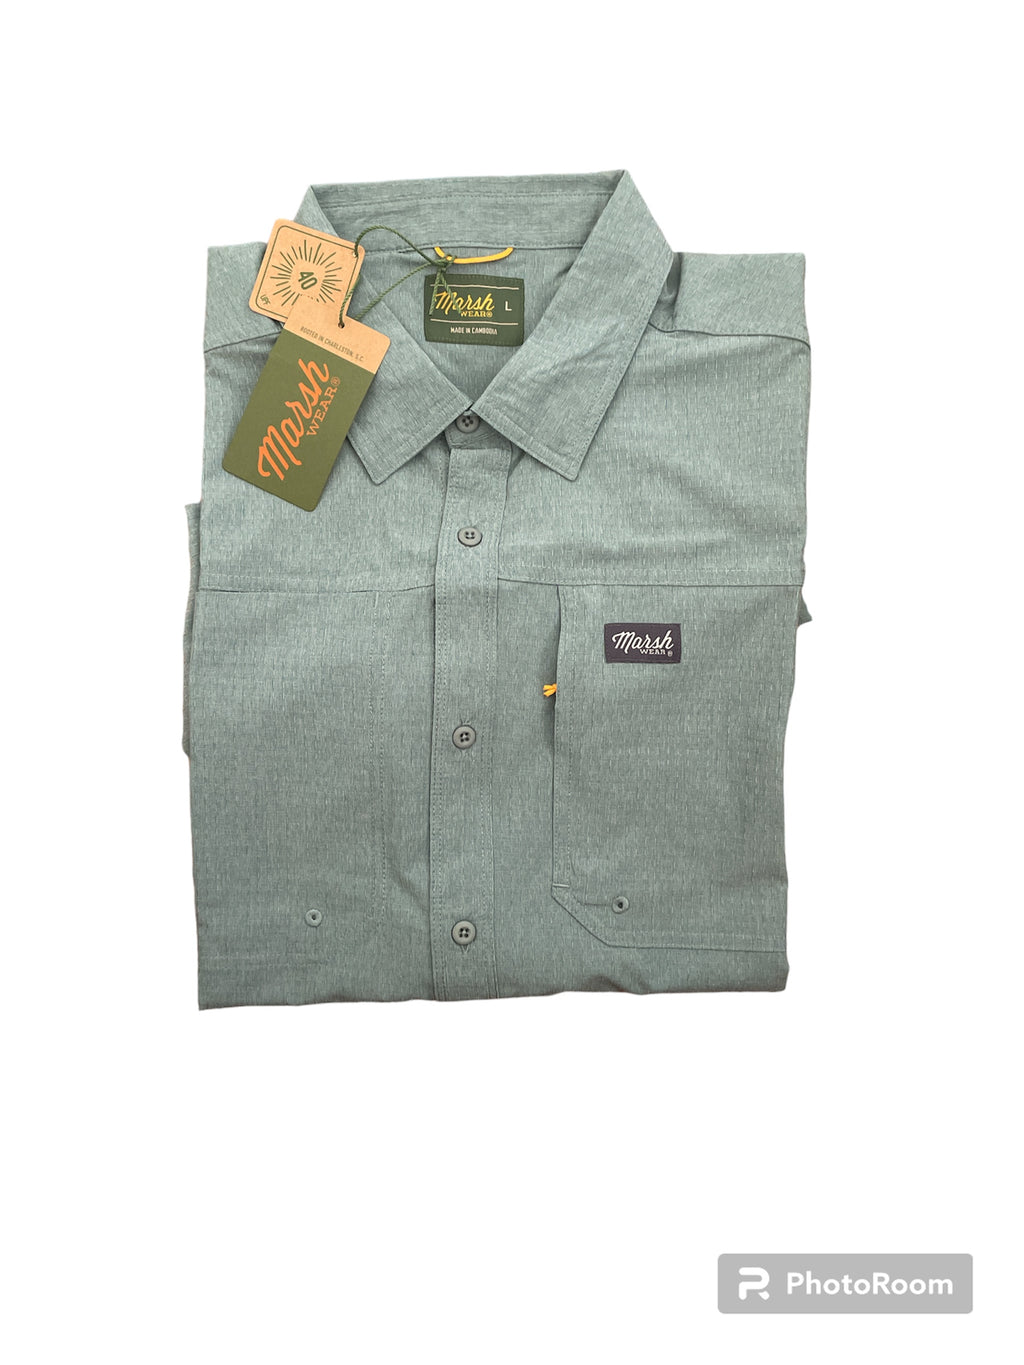 Marsh Wear Lenwood Trellis Shirt